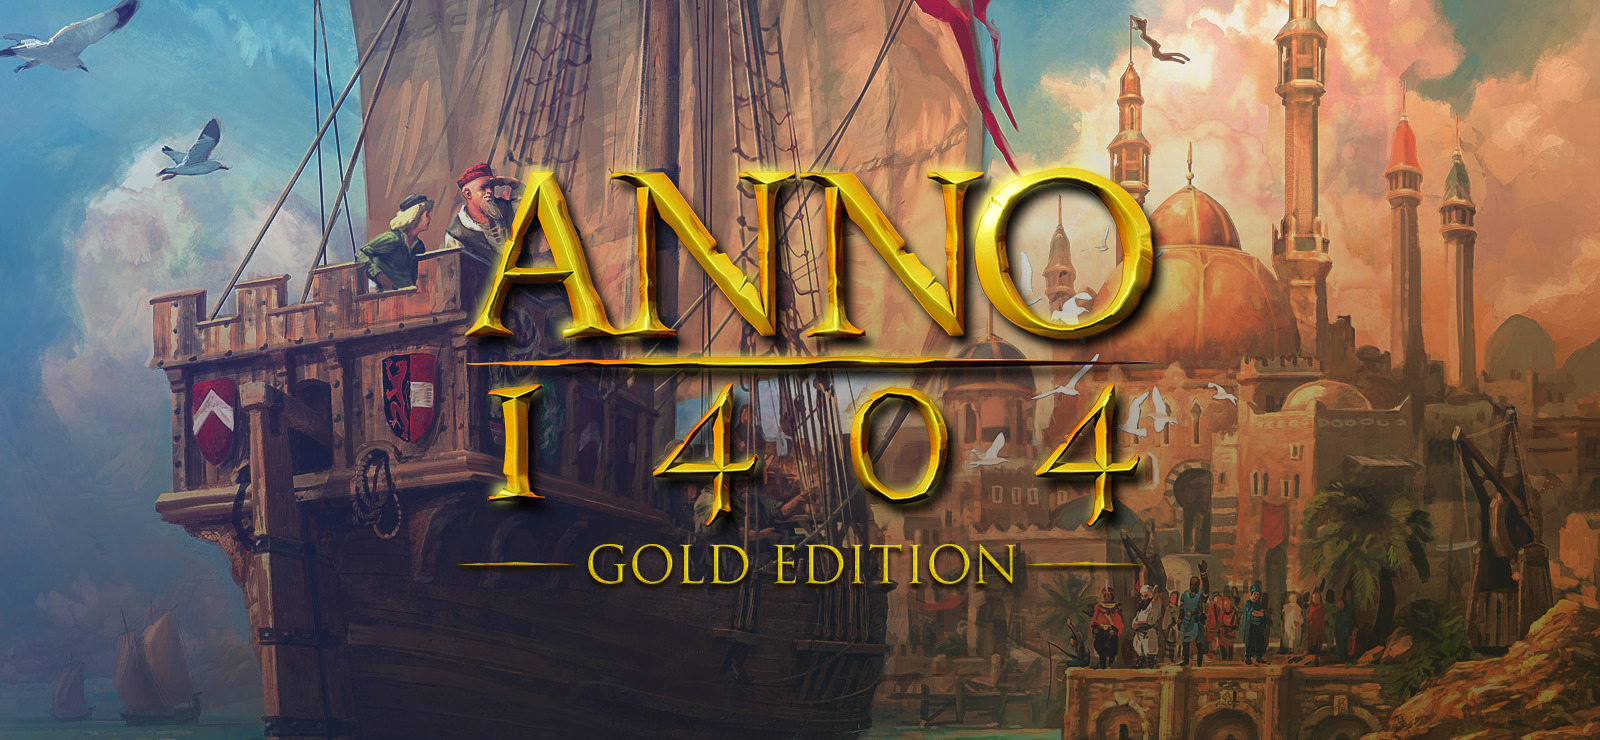 Anno 1404 Венеция (Venice)